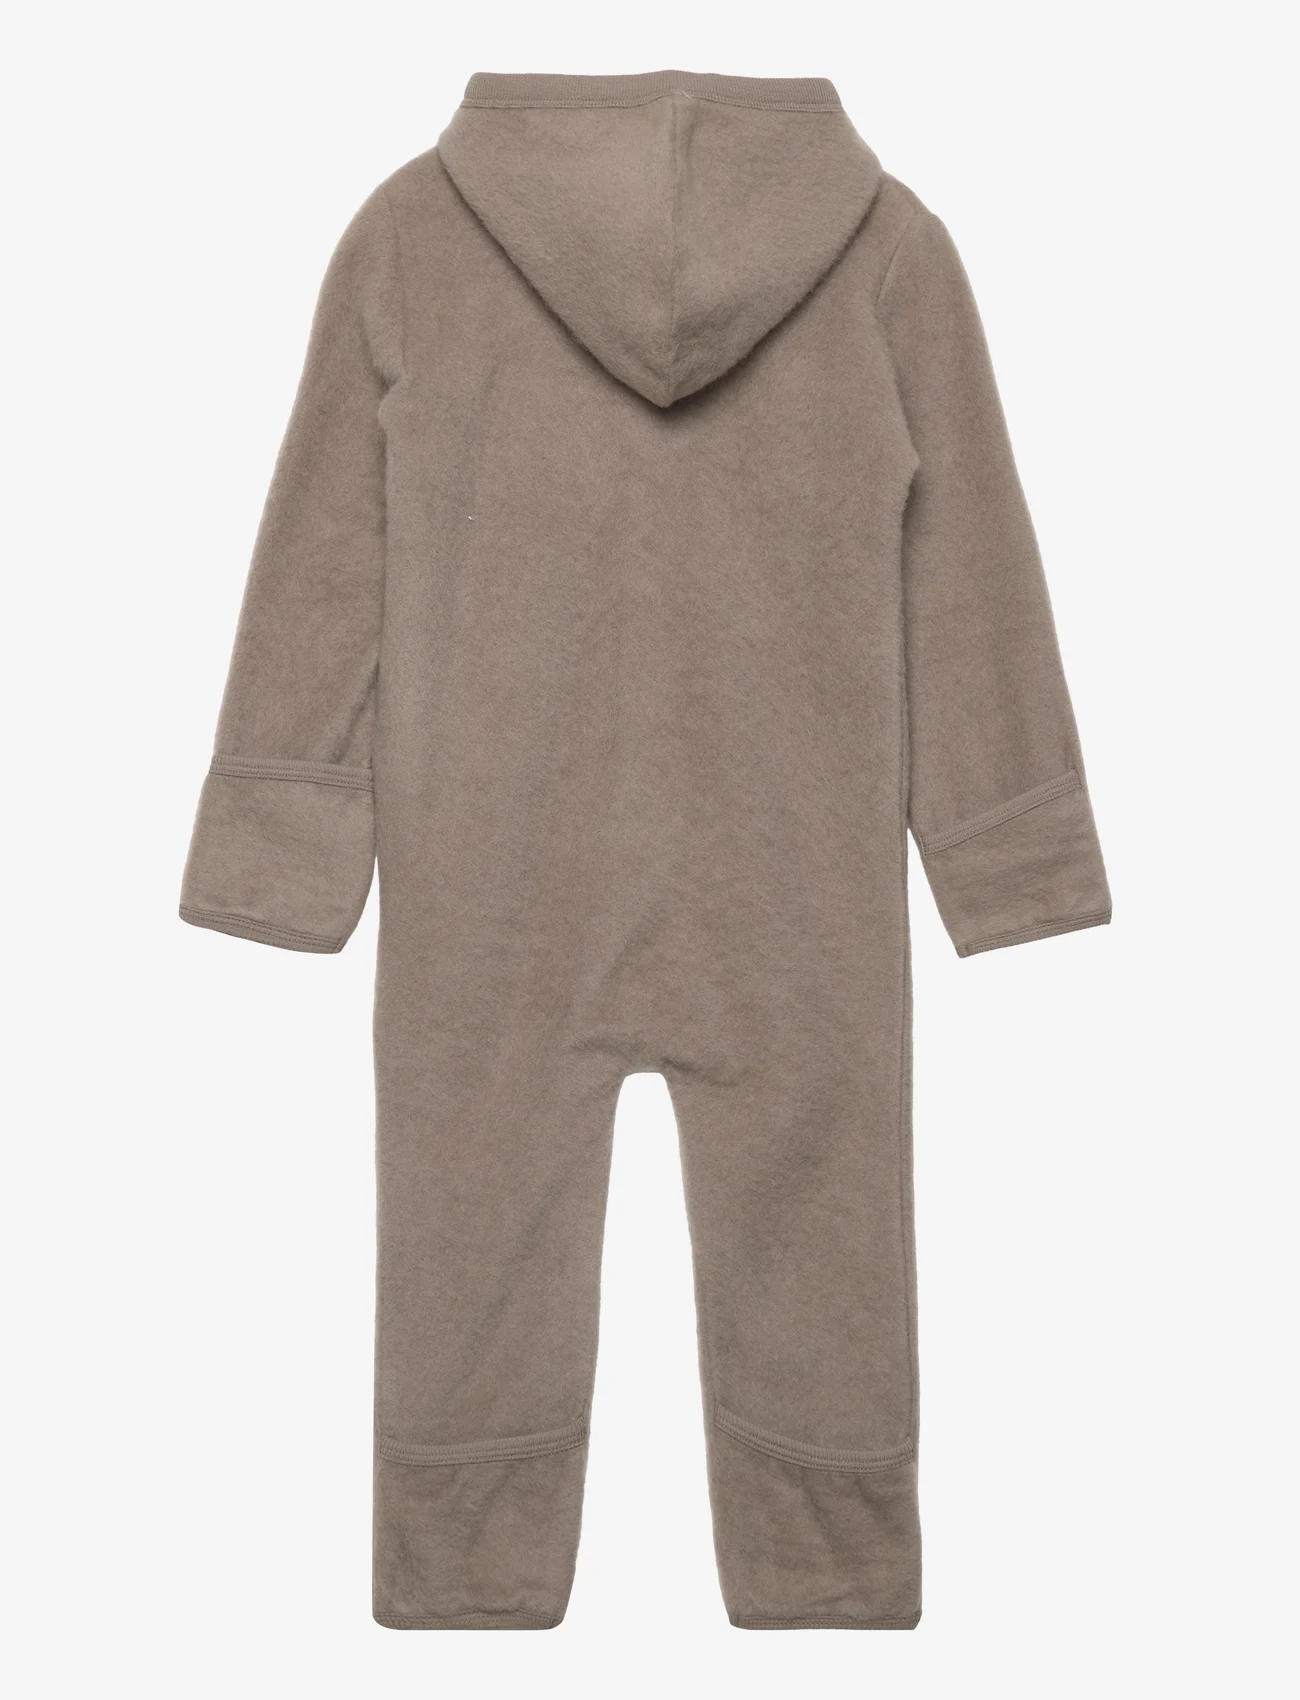 Wheat - Wool Fleece Suit Ata - jumpsuits - grey stone - 1